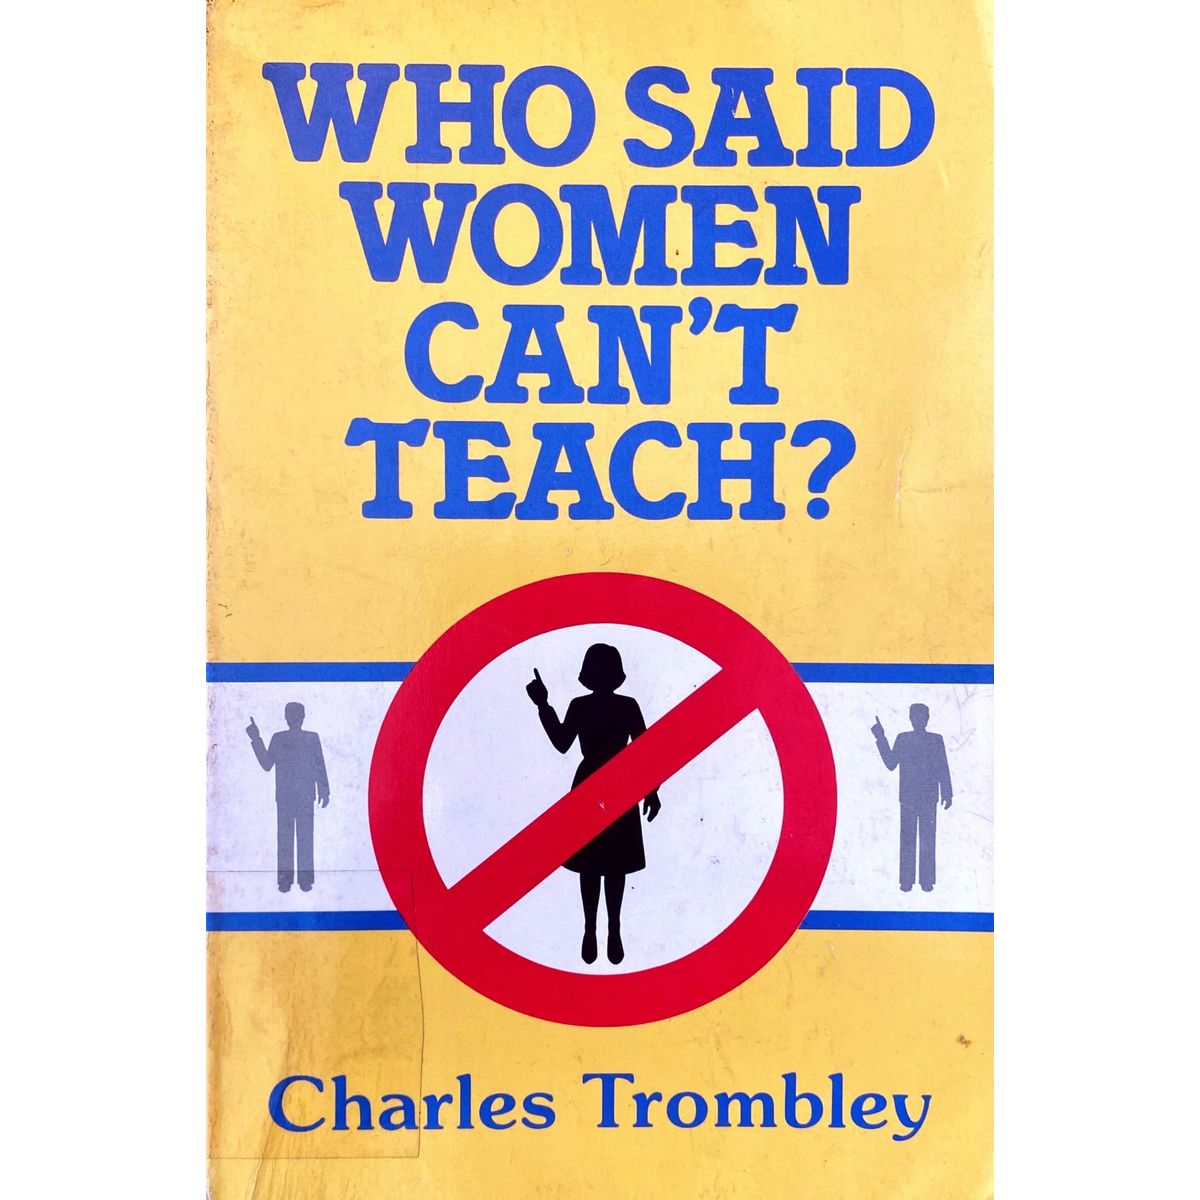 ISBN: 9780882705842 / 0882705849 - Who Said Women Can't Teach? by Charles Trombley [1985]